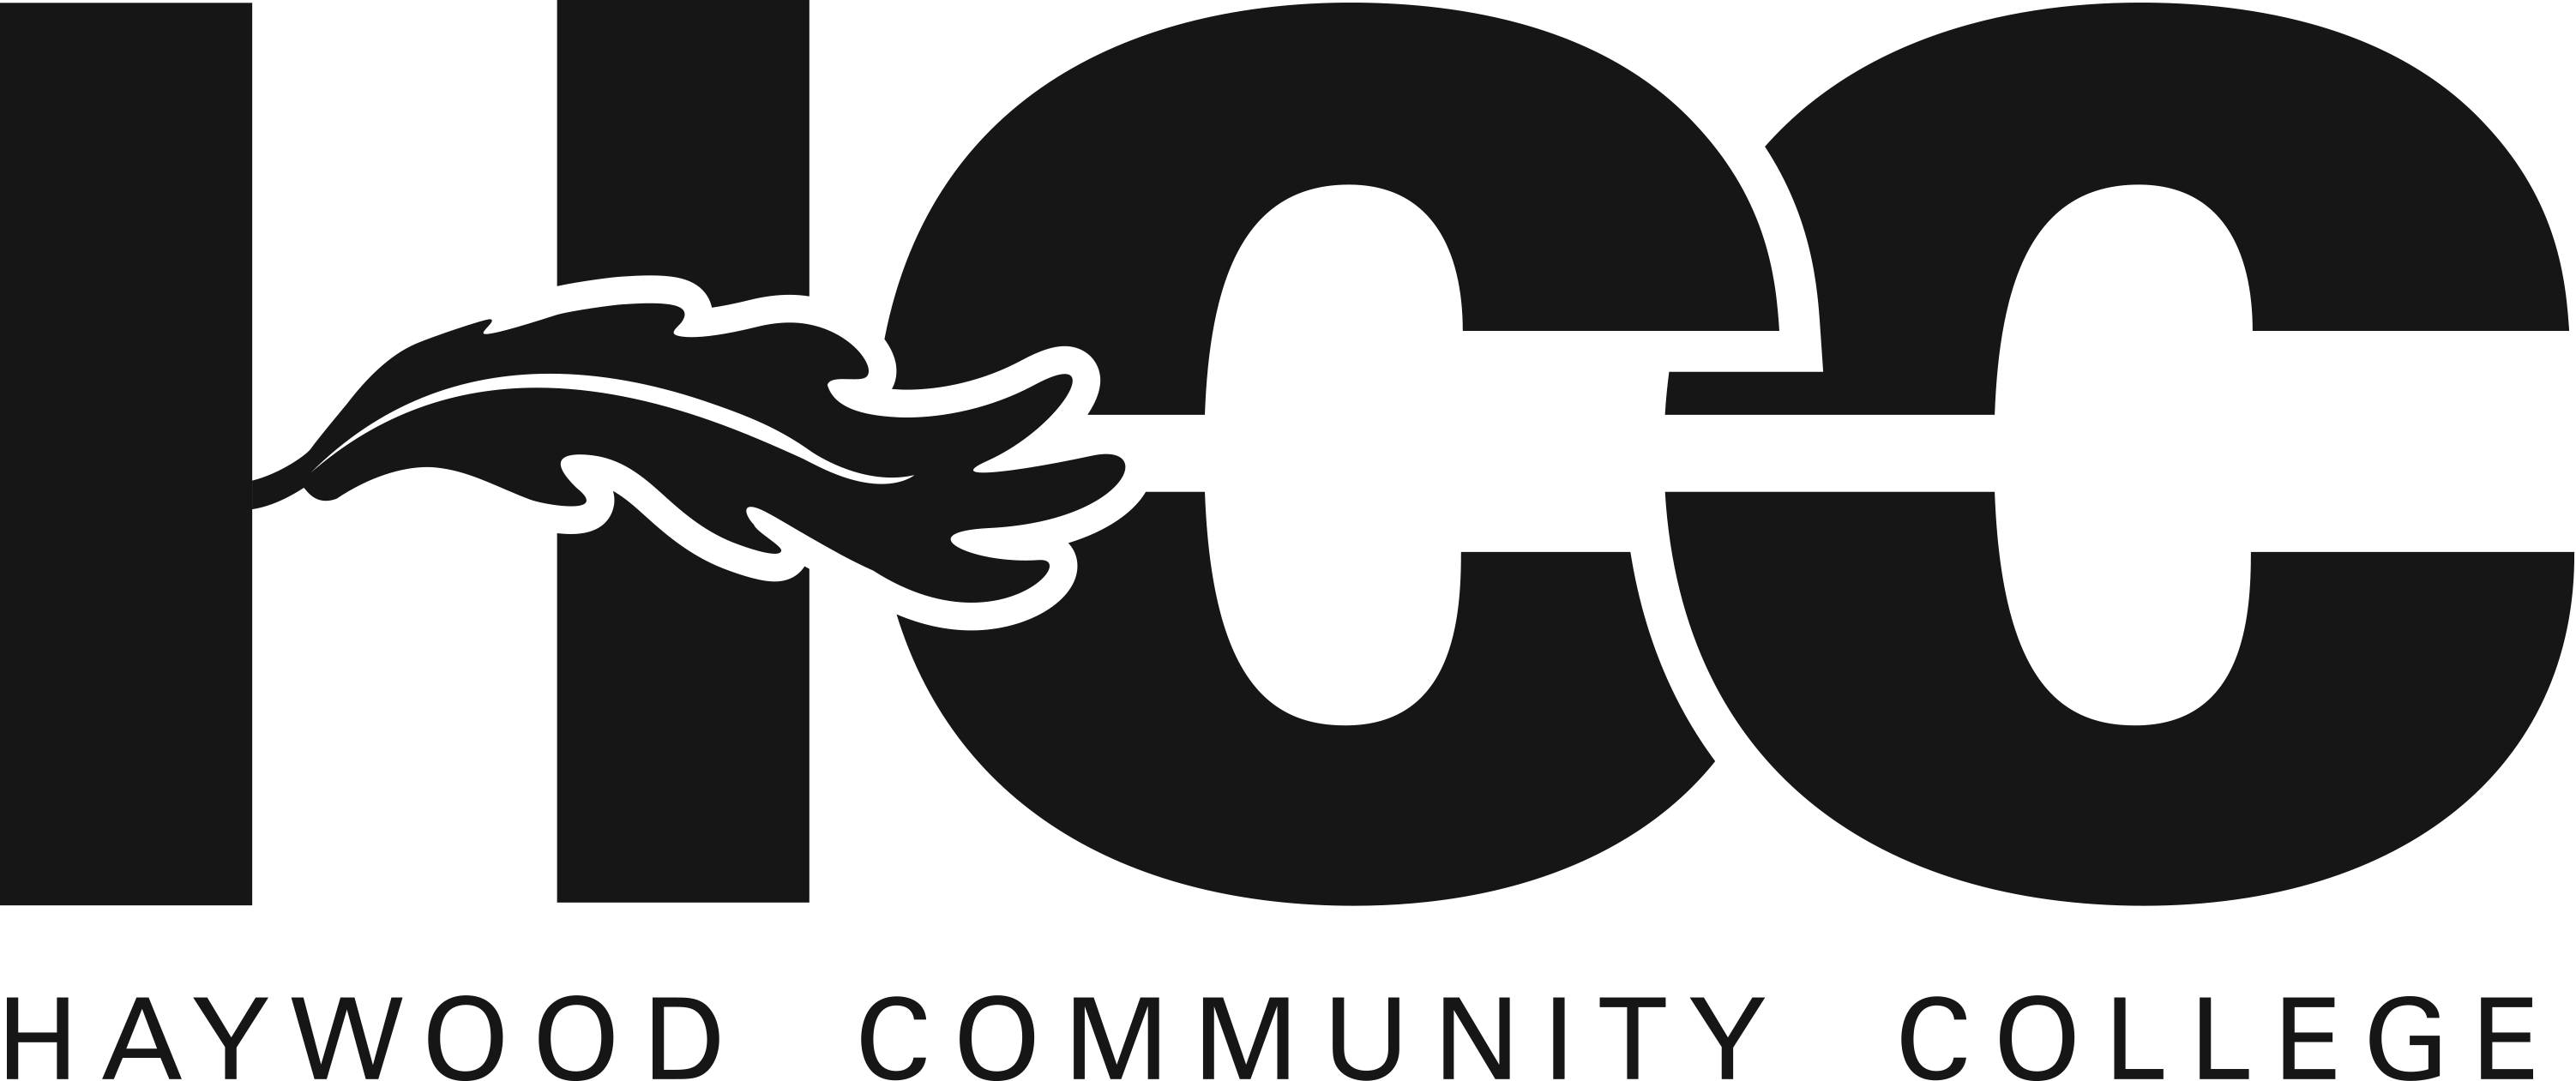 HCC Logo - Logos and Templates. Haywood Community College